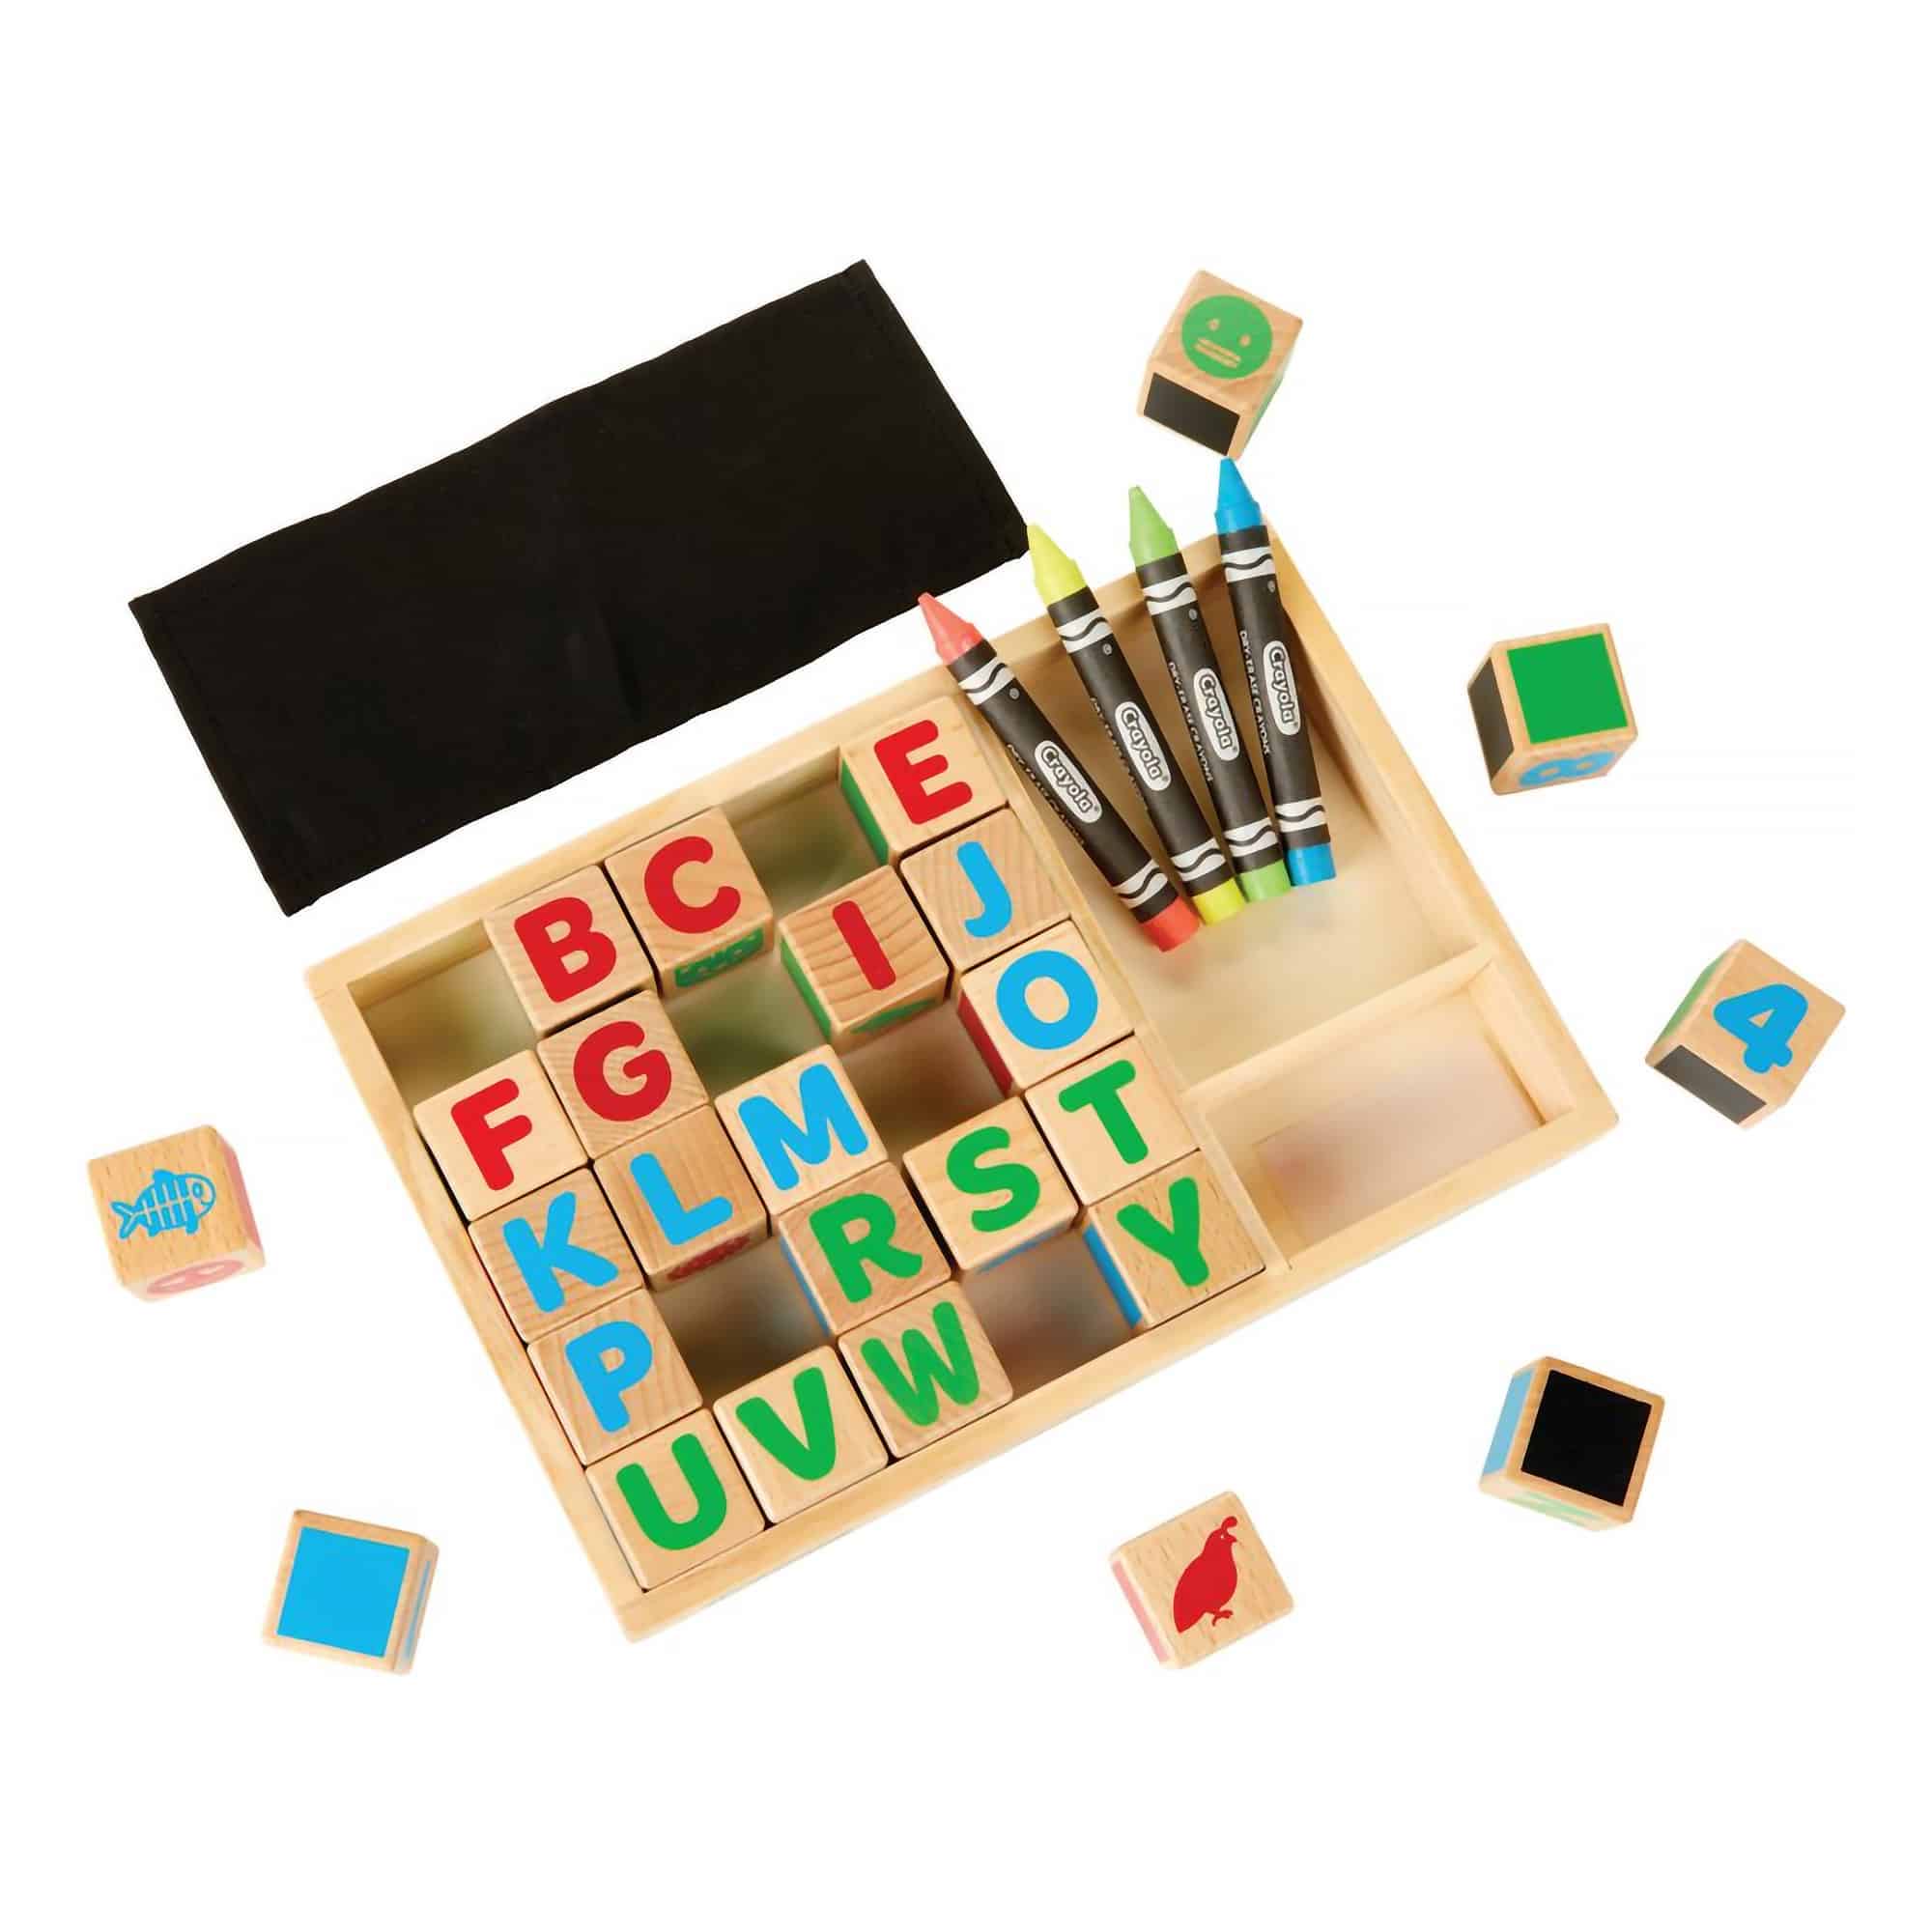 Crayola - Alphabet Colour & Play Blocks